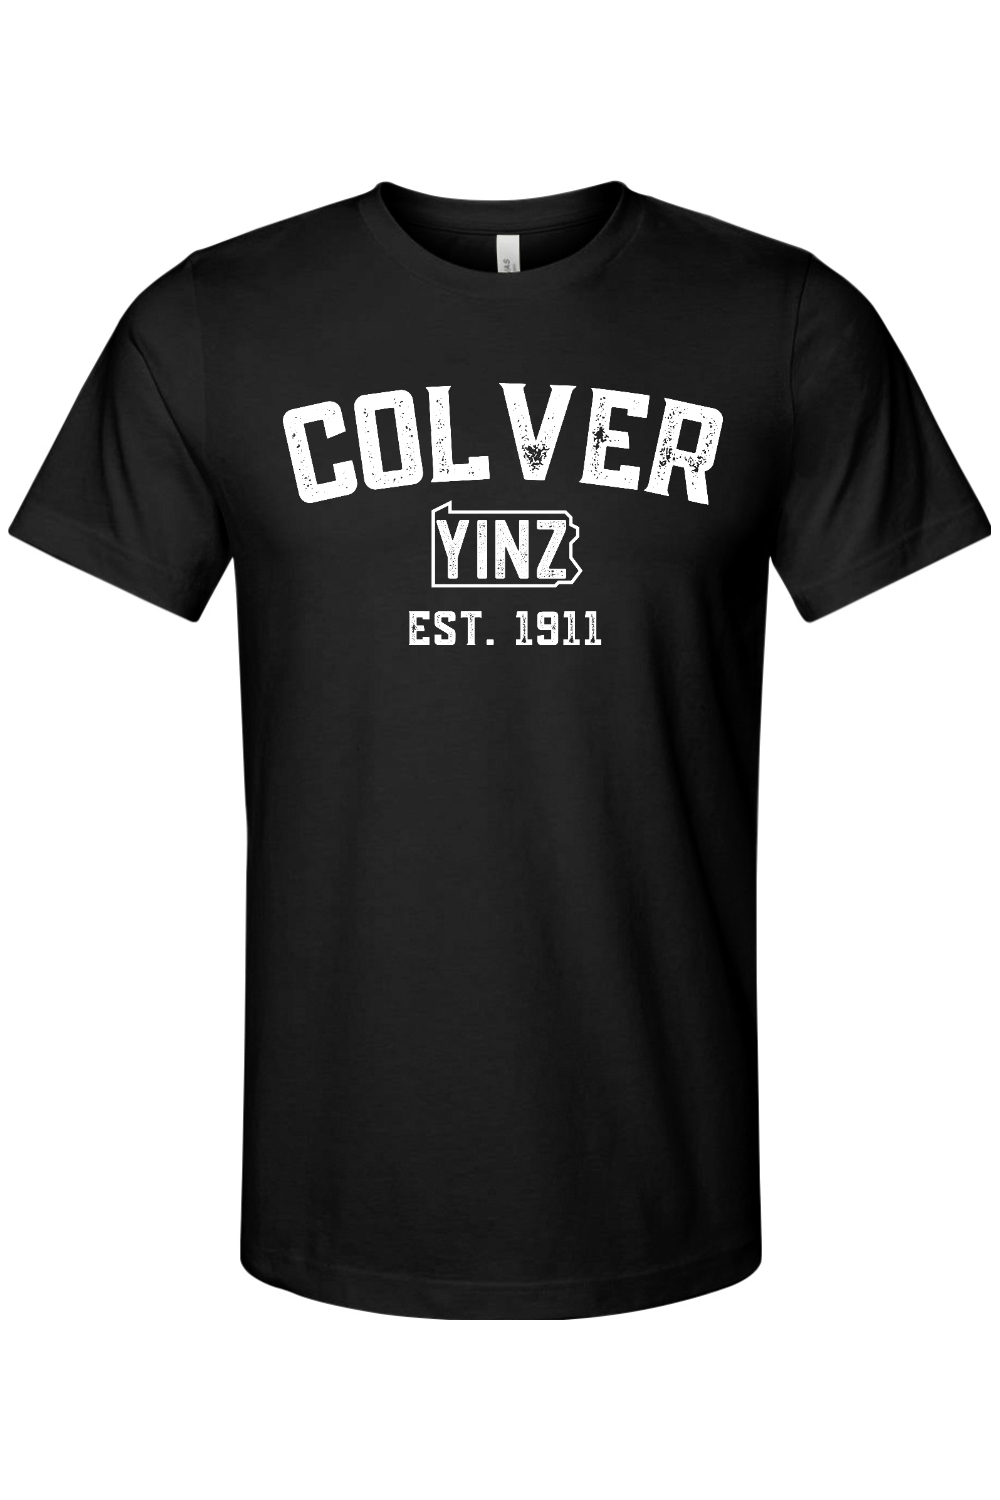 Colver Yinzylvania - Yinzylvania